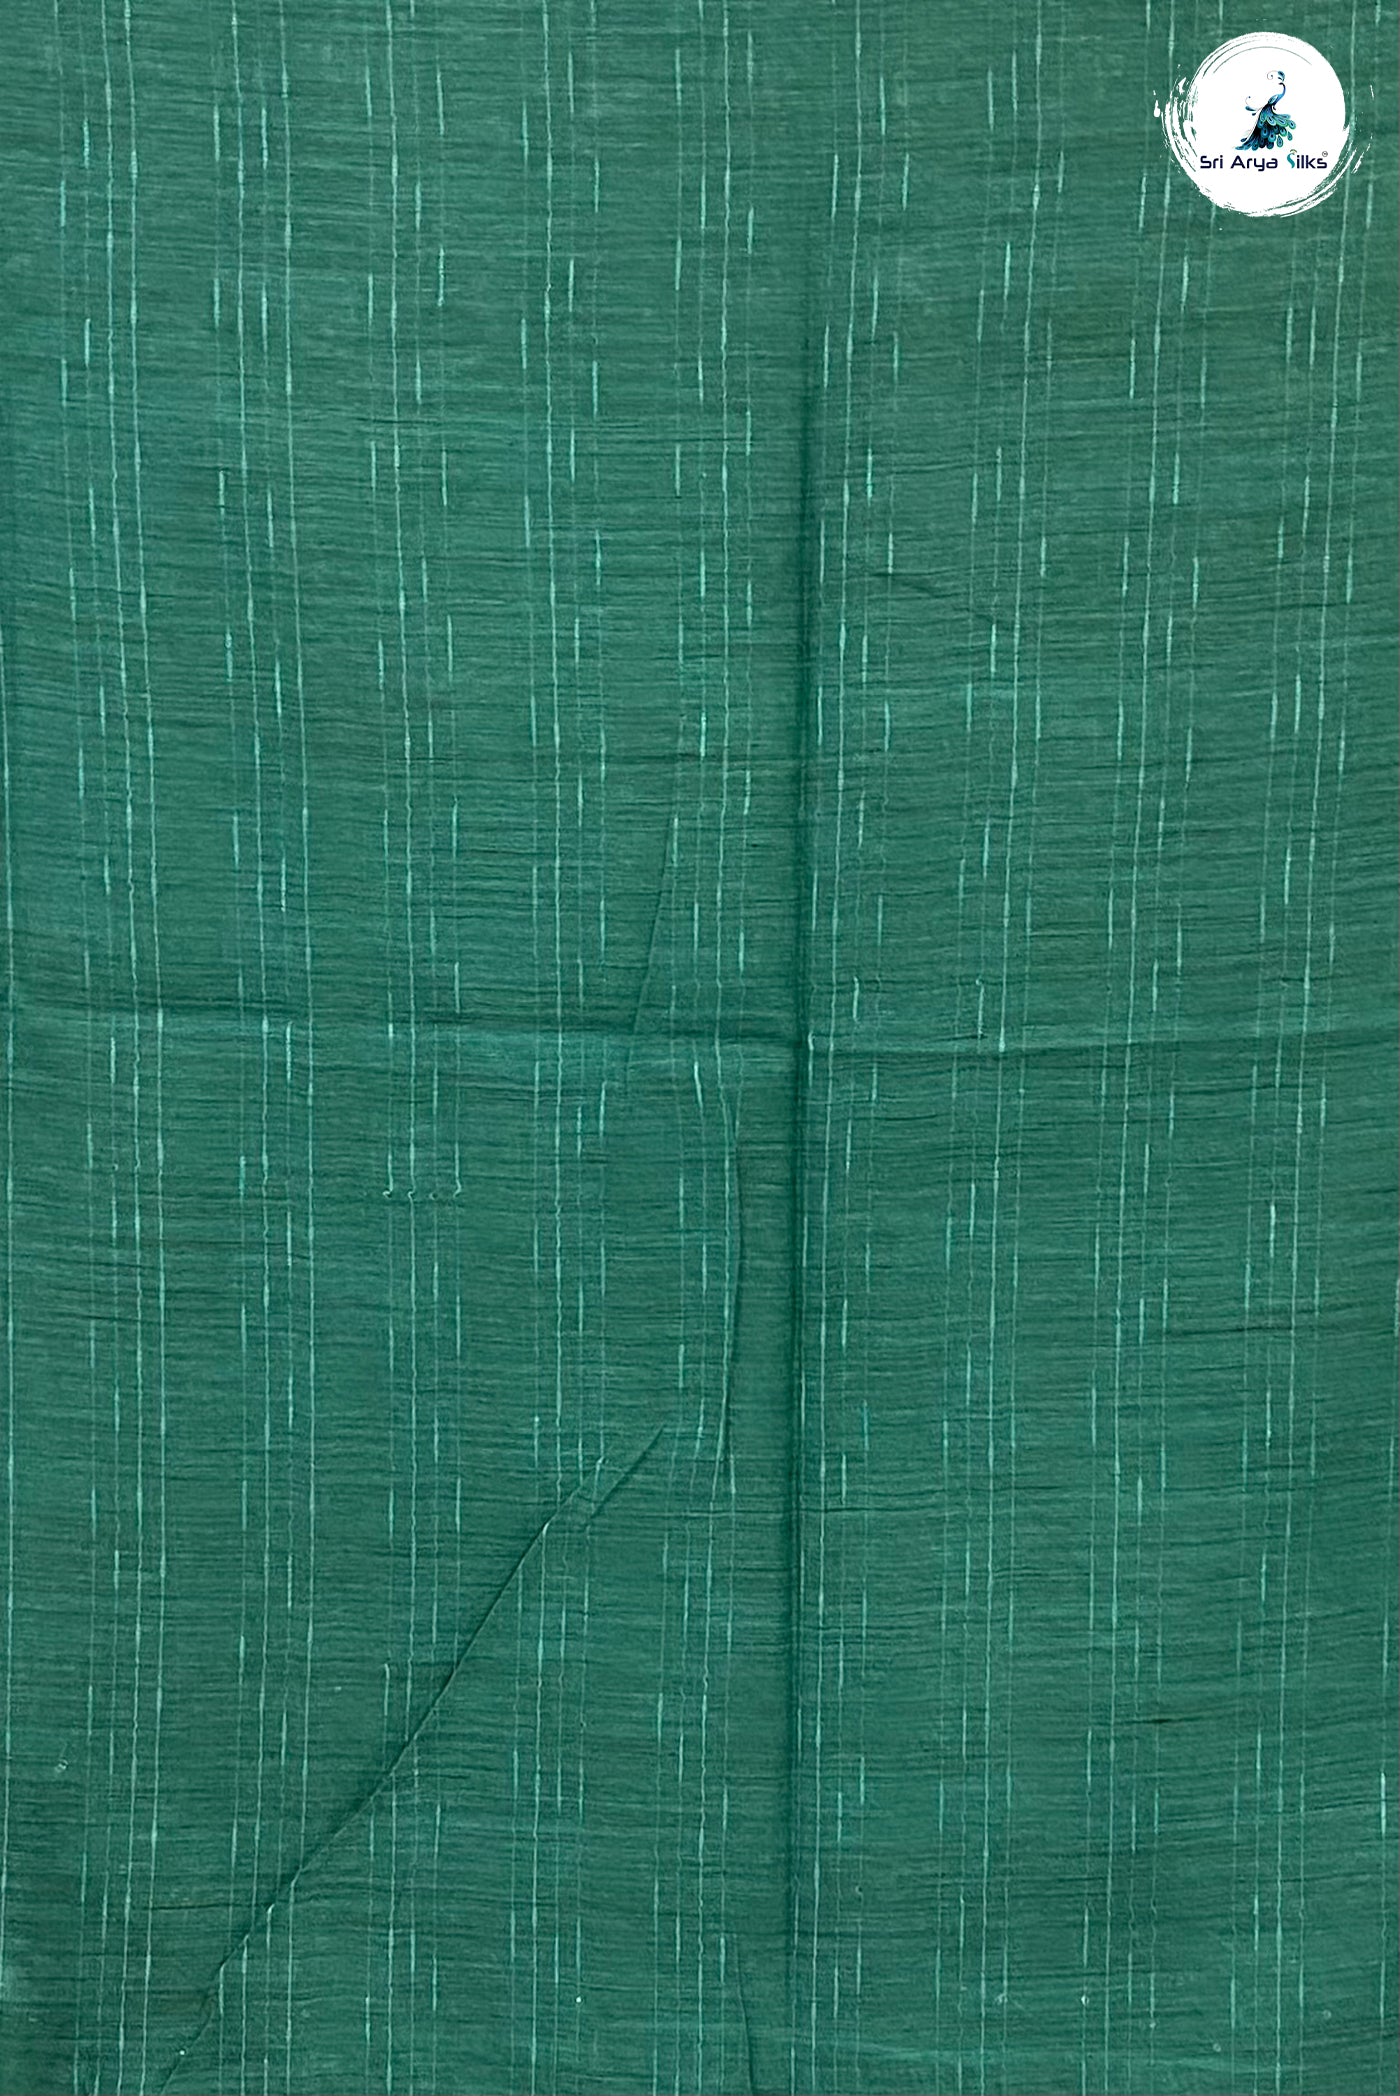 Green Office Wear Saree With Thread Work Pattern